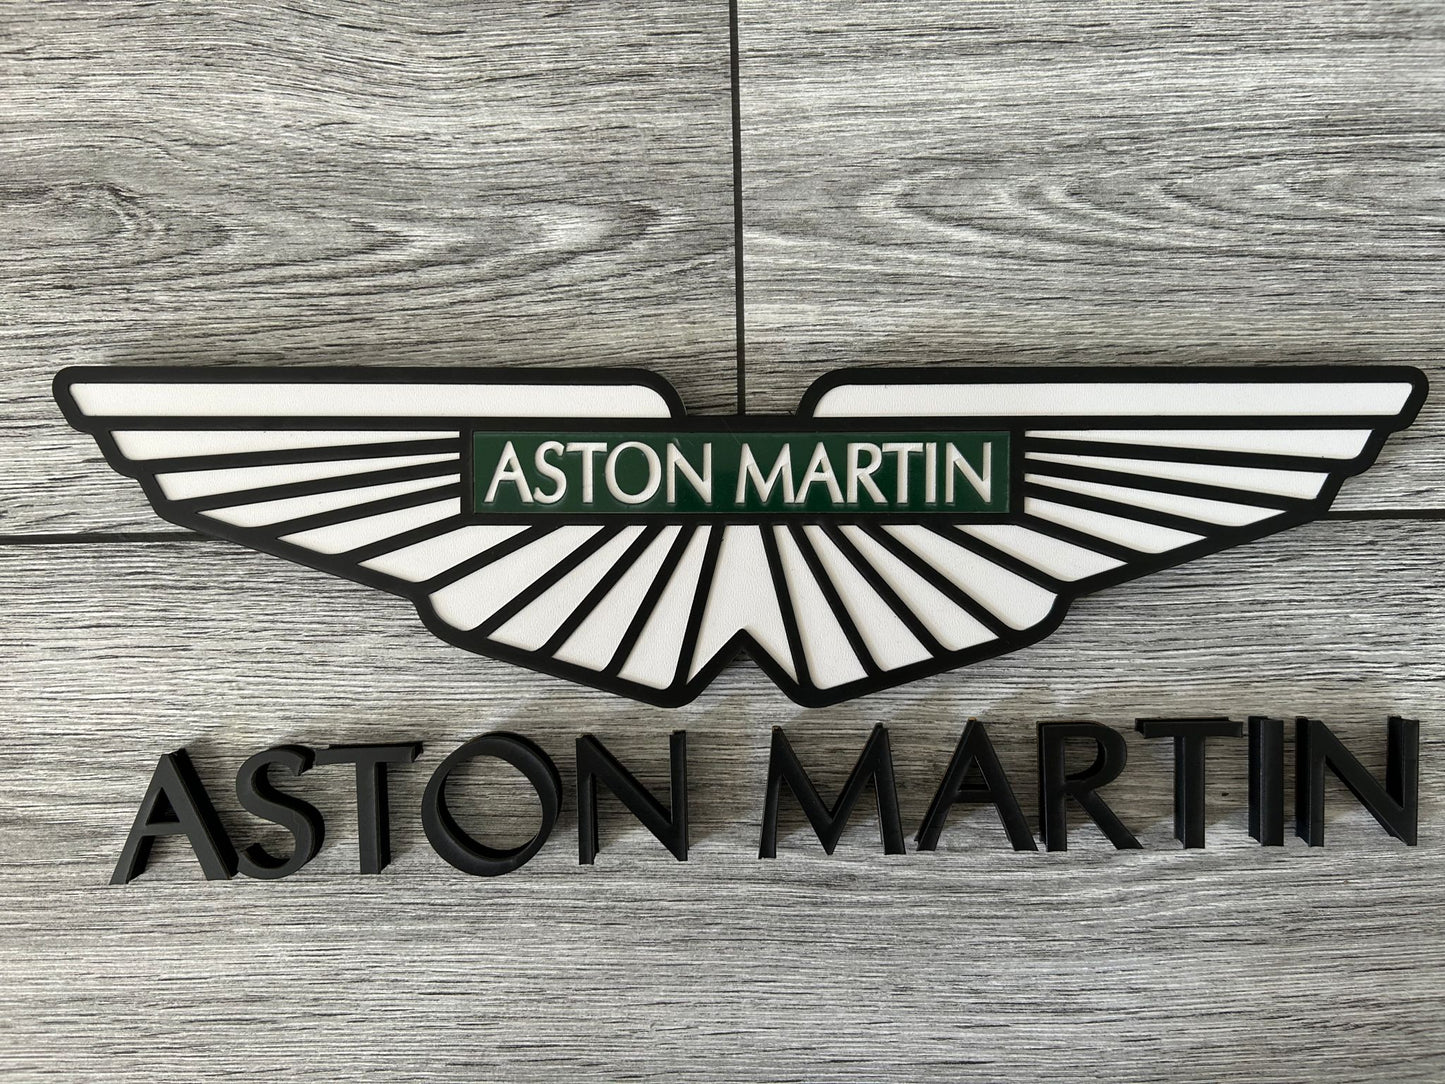 Aston Martin Wall Decor,Aston Martin Wooden Sign, Aston Martin emblem,Vehicle Wall Plaque, Showroom, Cars Showroom Garage,Car Emblems